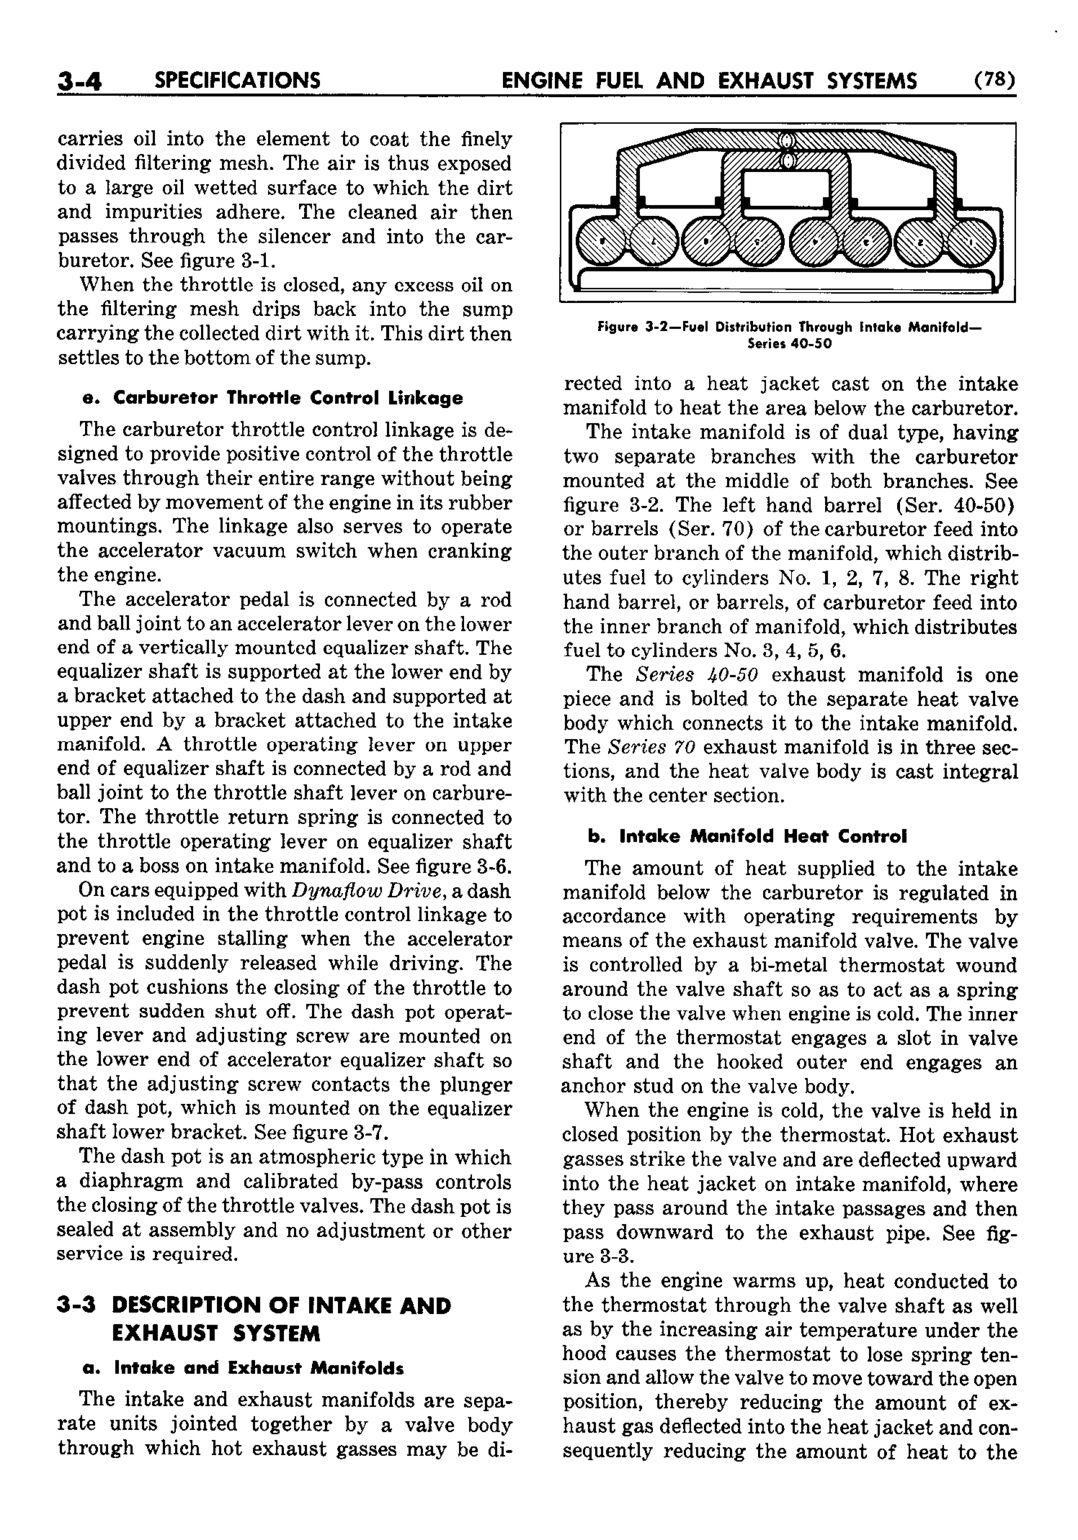 n_04 1952 Buick Shop Manual - Engine Fuel & Exhaust-004-004.jpg